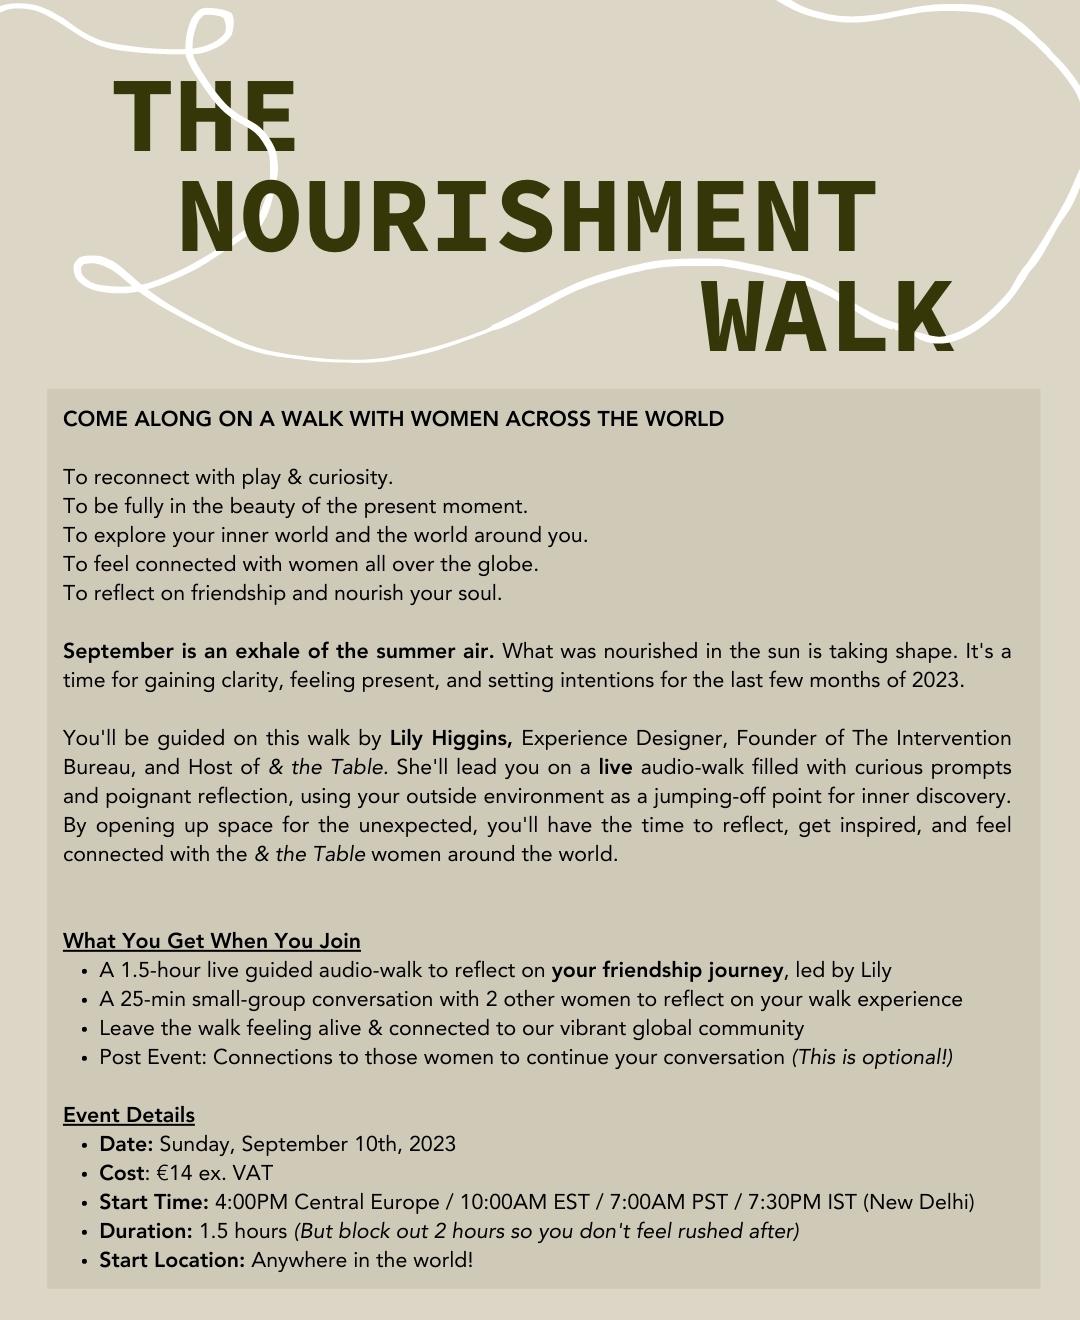 The Nourishment Walk